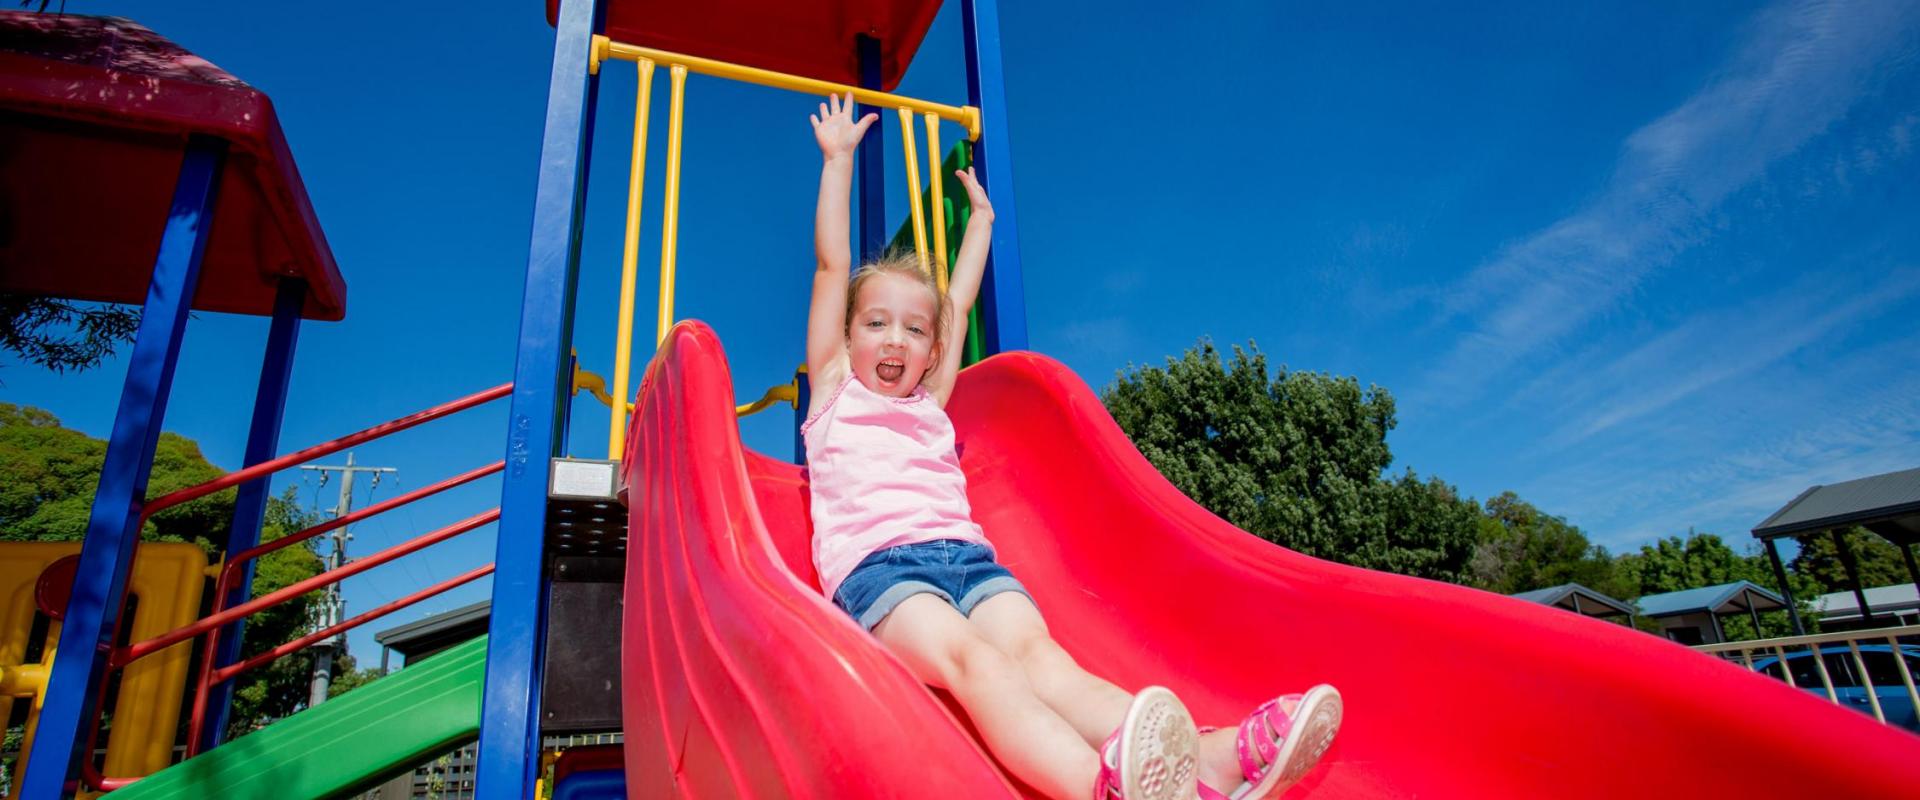 BIG4 Shepparton Park Lane Holiday Park - Playground - Girl on slide